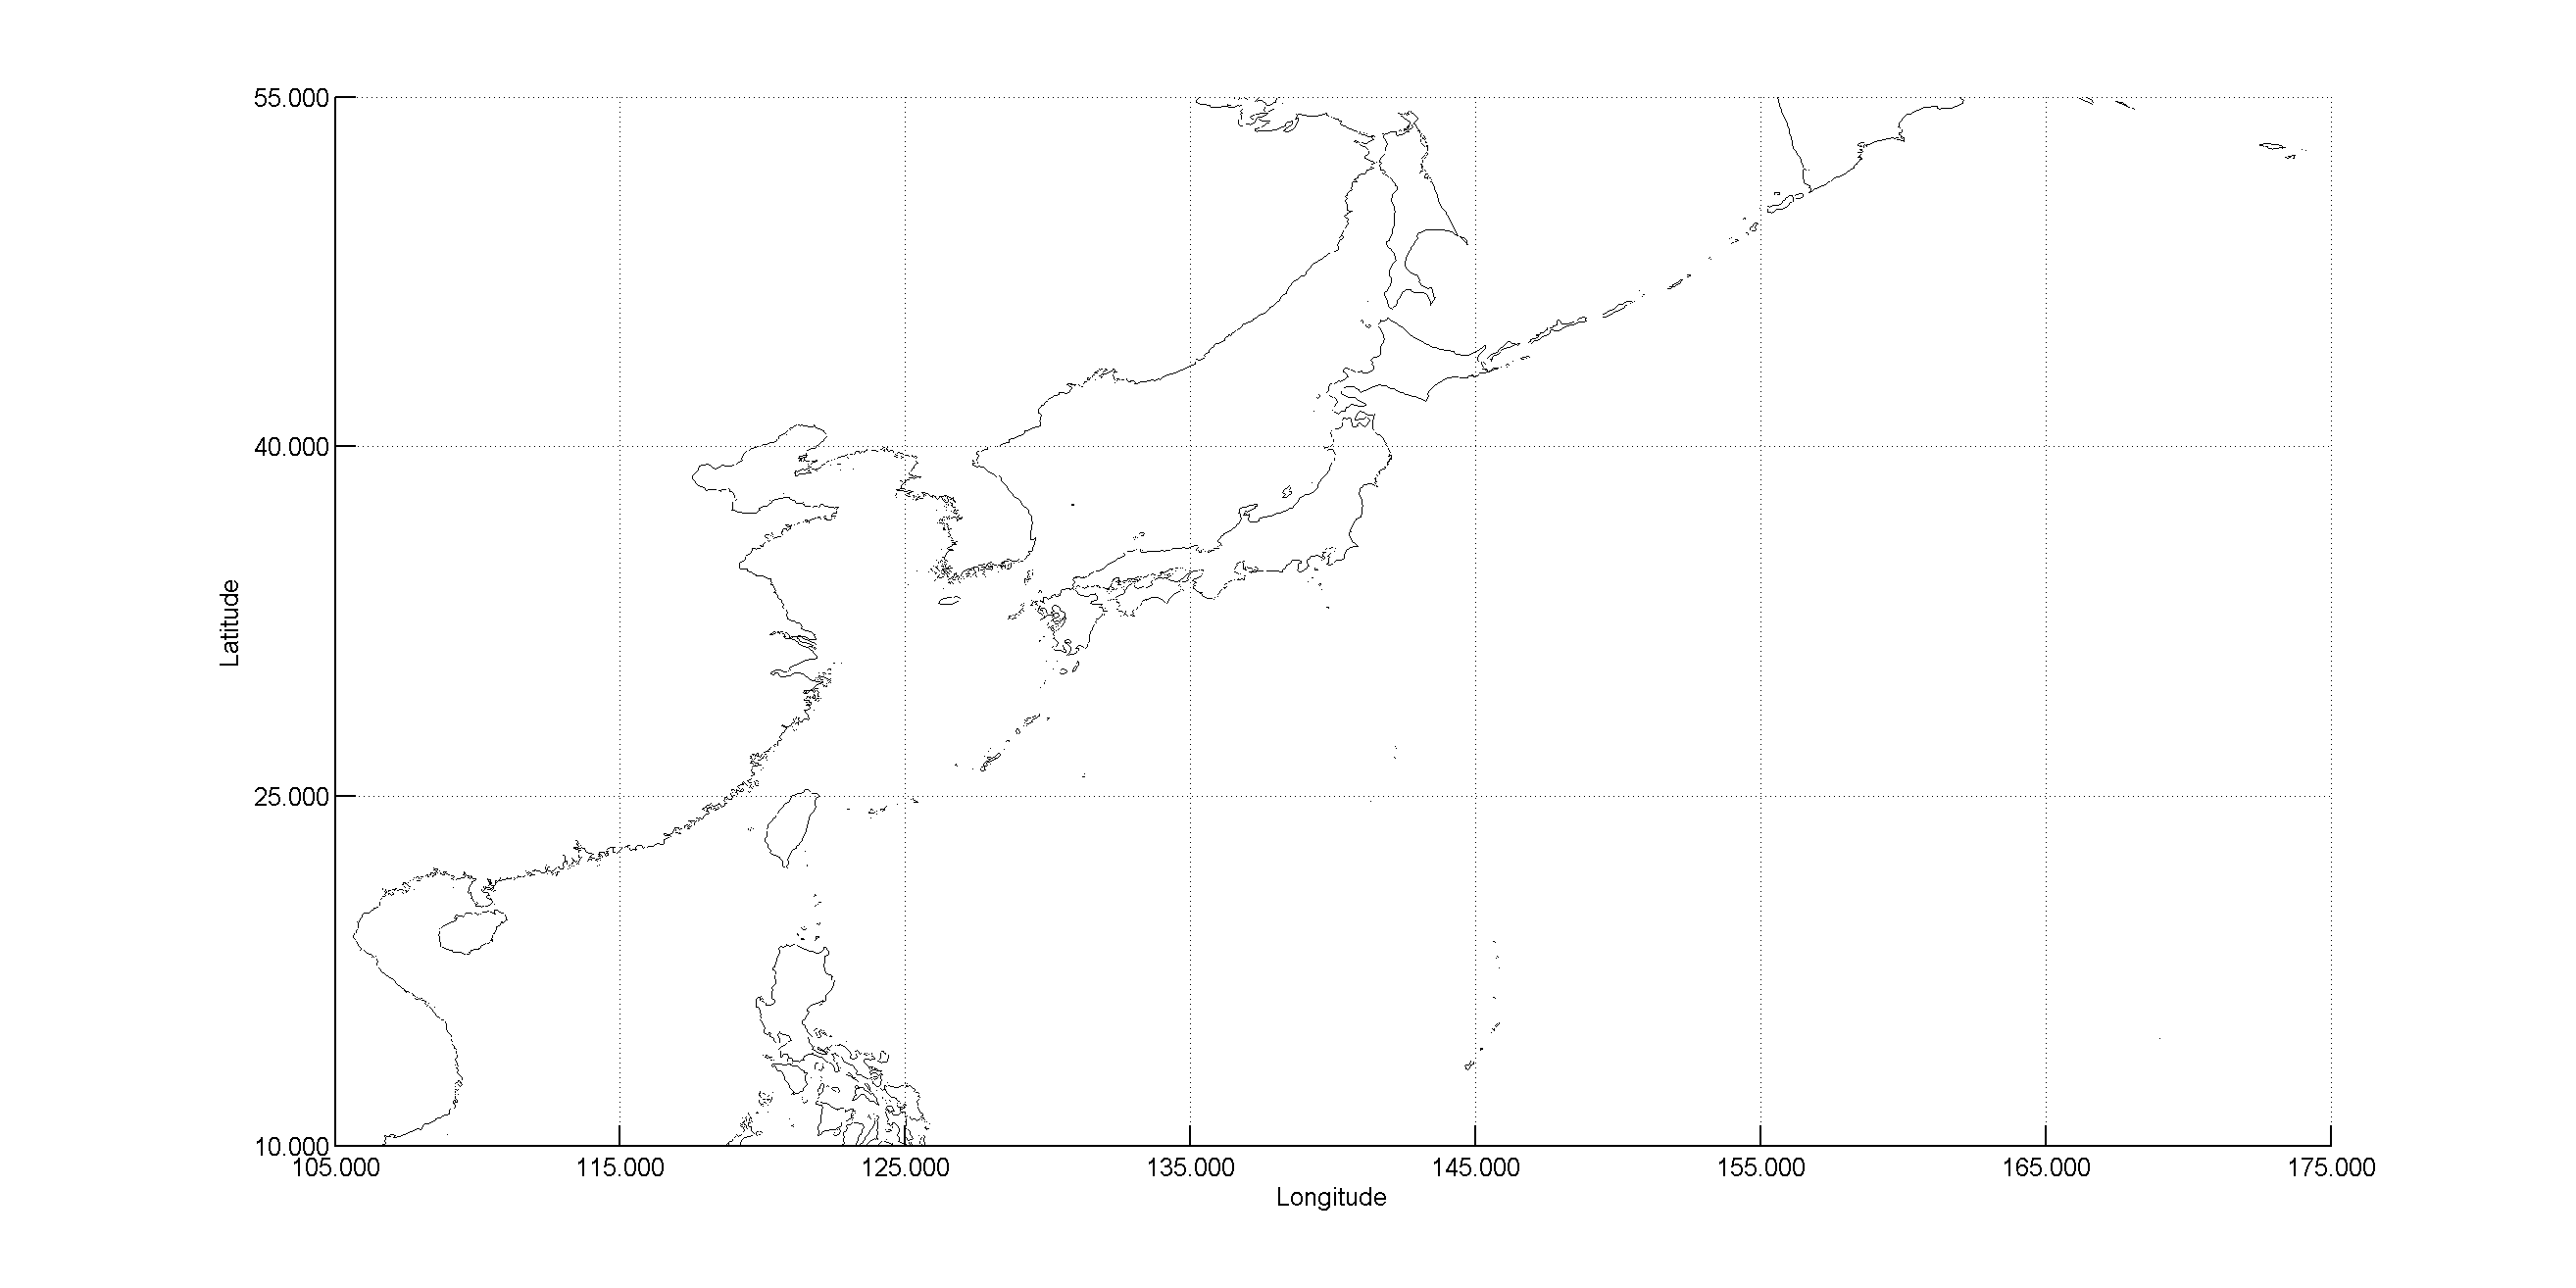 CYCLE_229 - Japan Descending passes